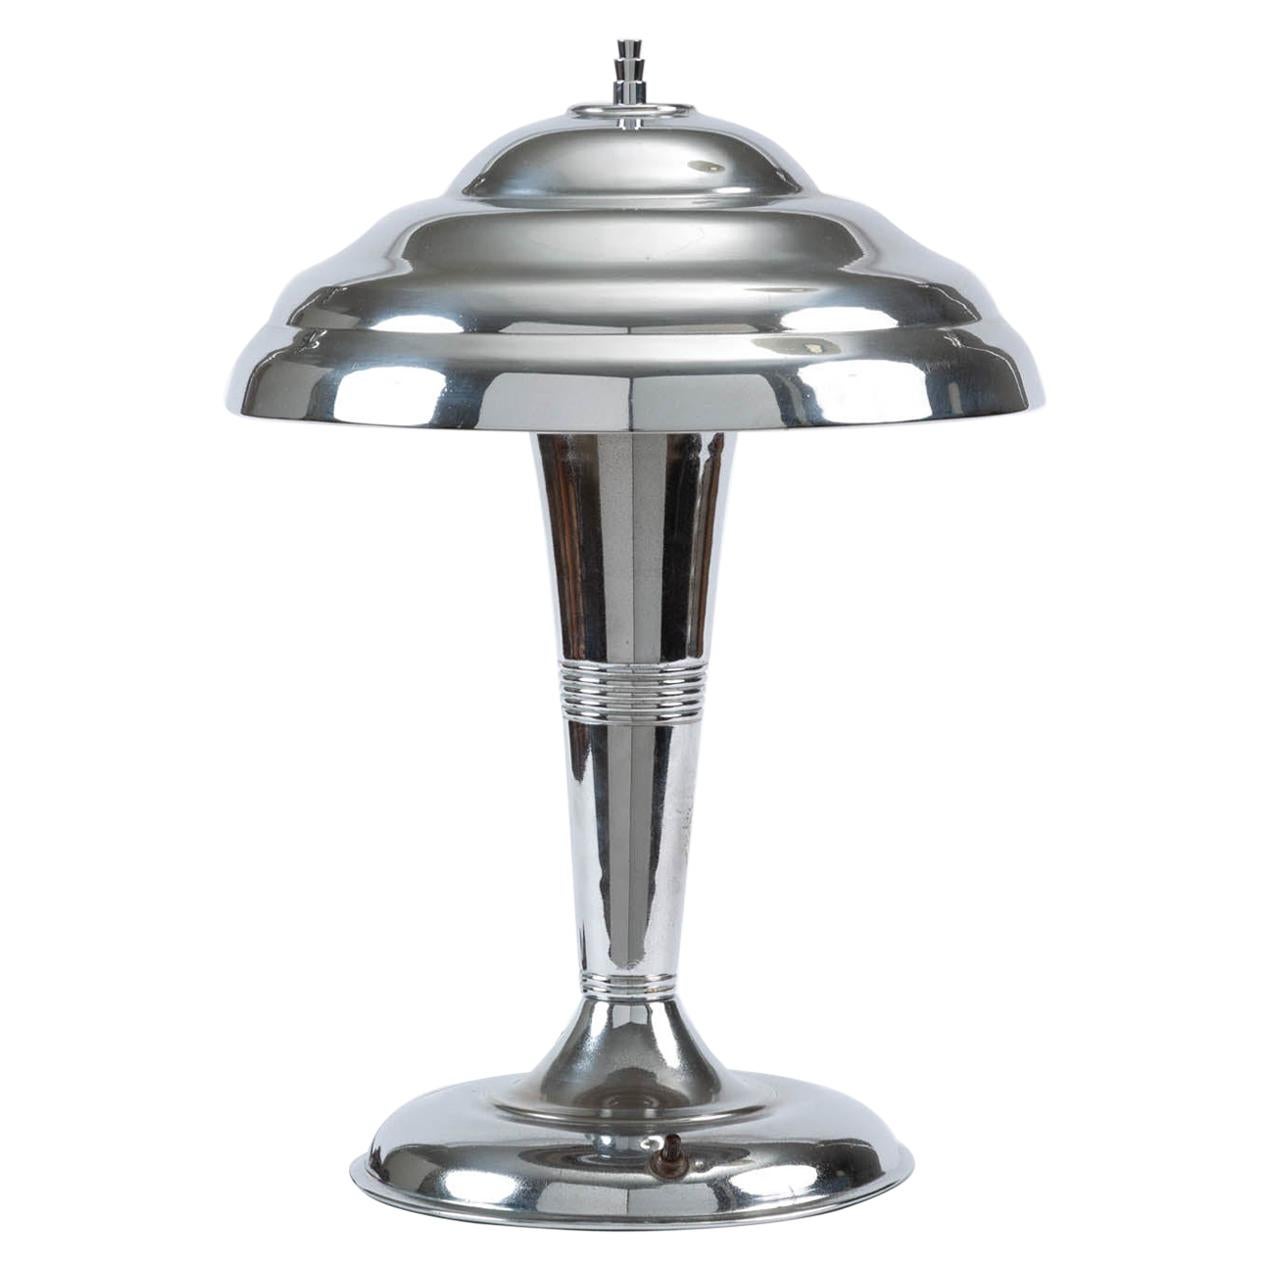 Chrome Art Deco Table Lamp with Saucer Shade